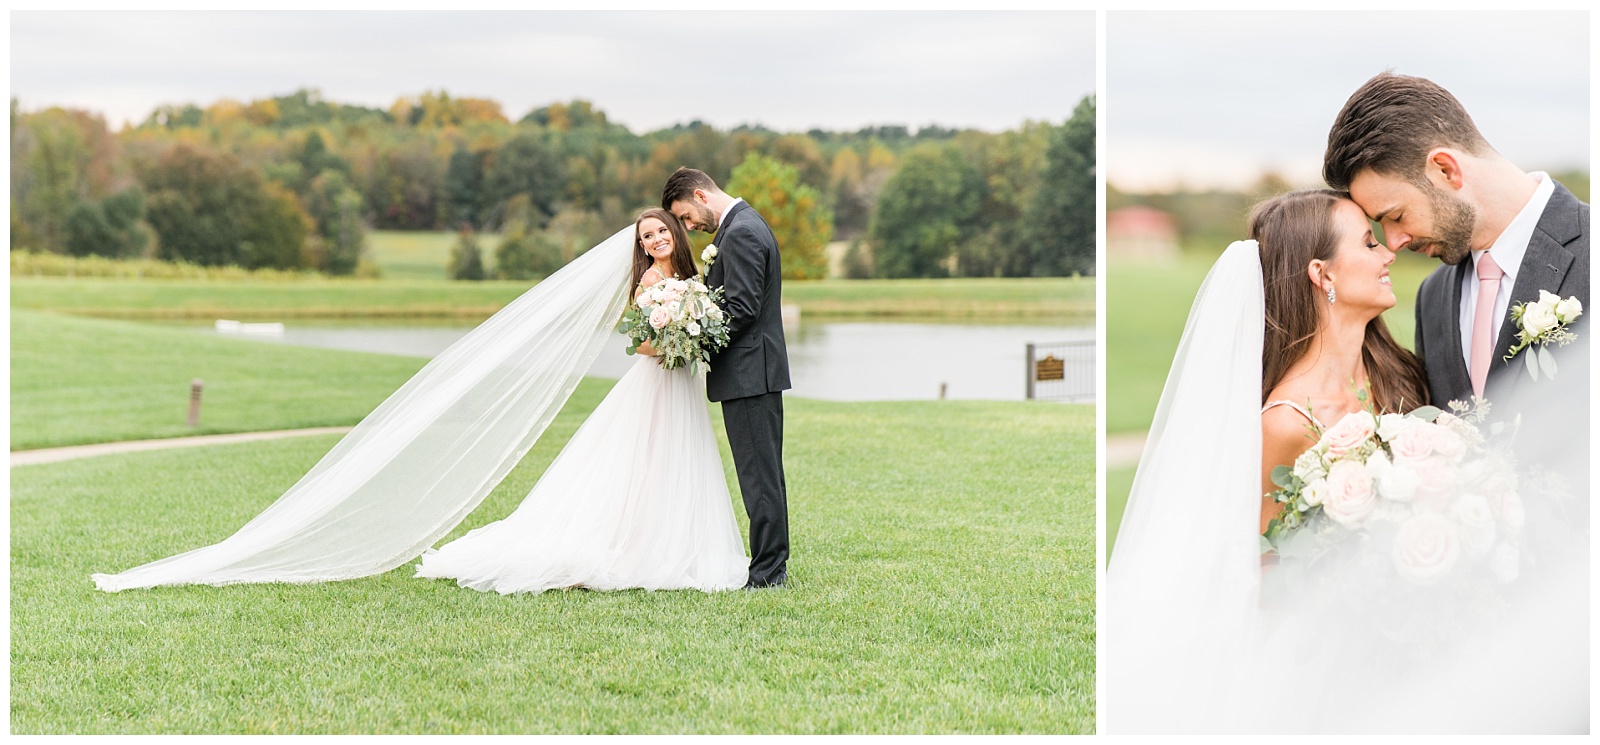 amazing cathedral length veil for wedding portraits. Photo taken by jenn eddine photography, a greensboro north carolina wedding photographer